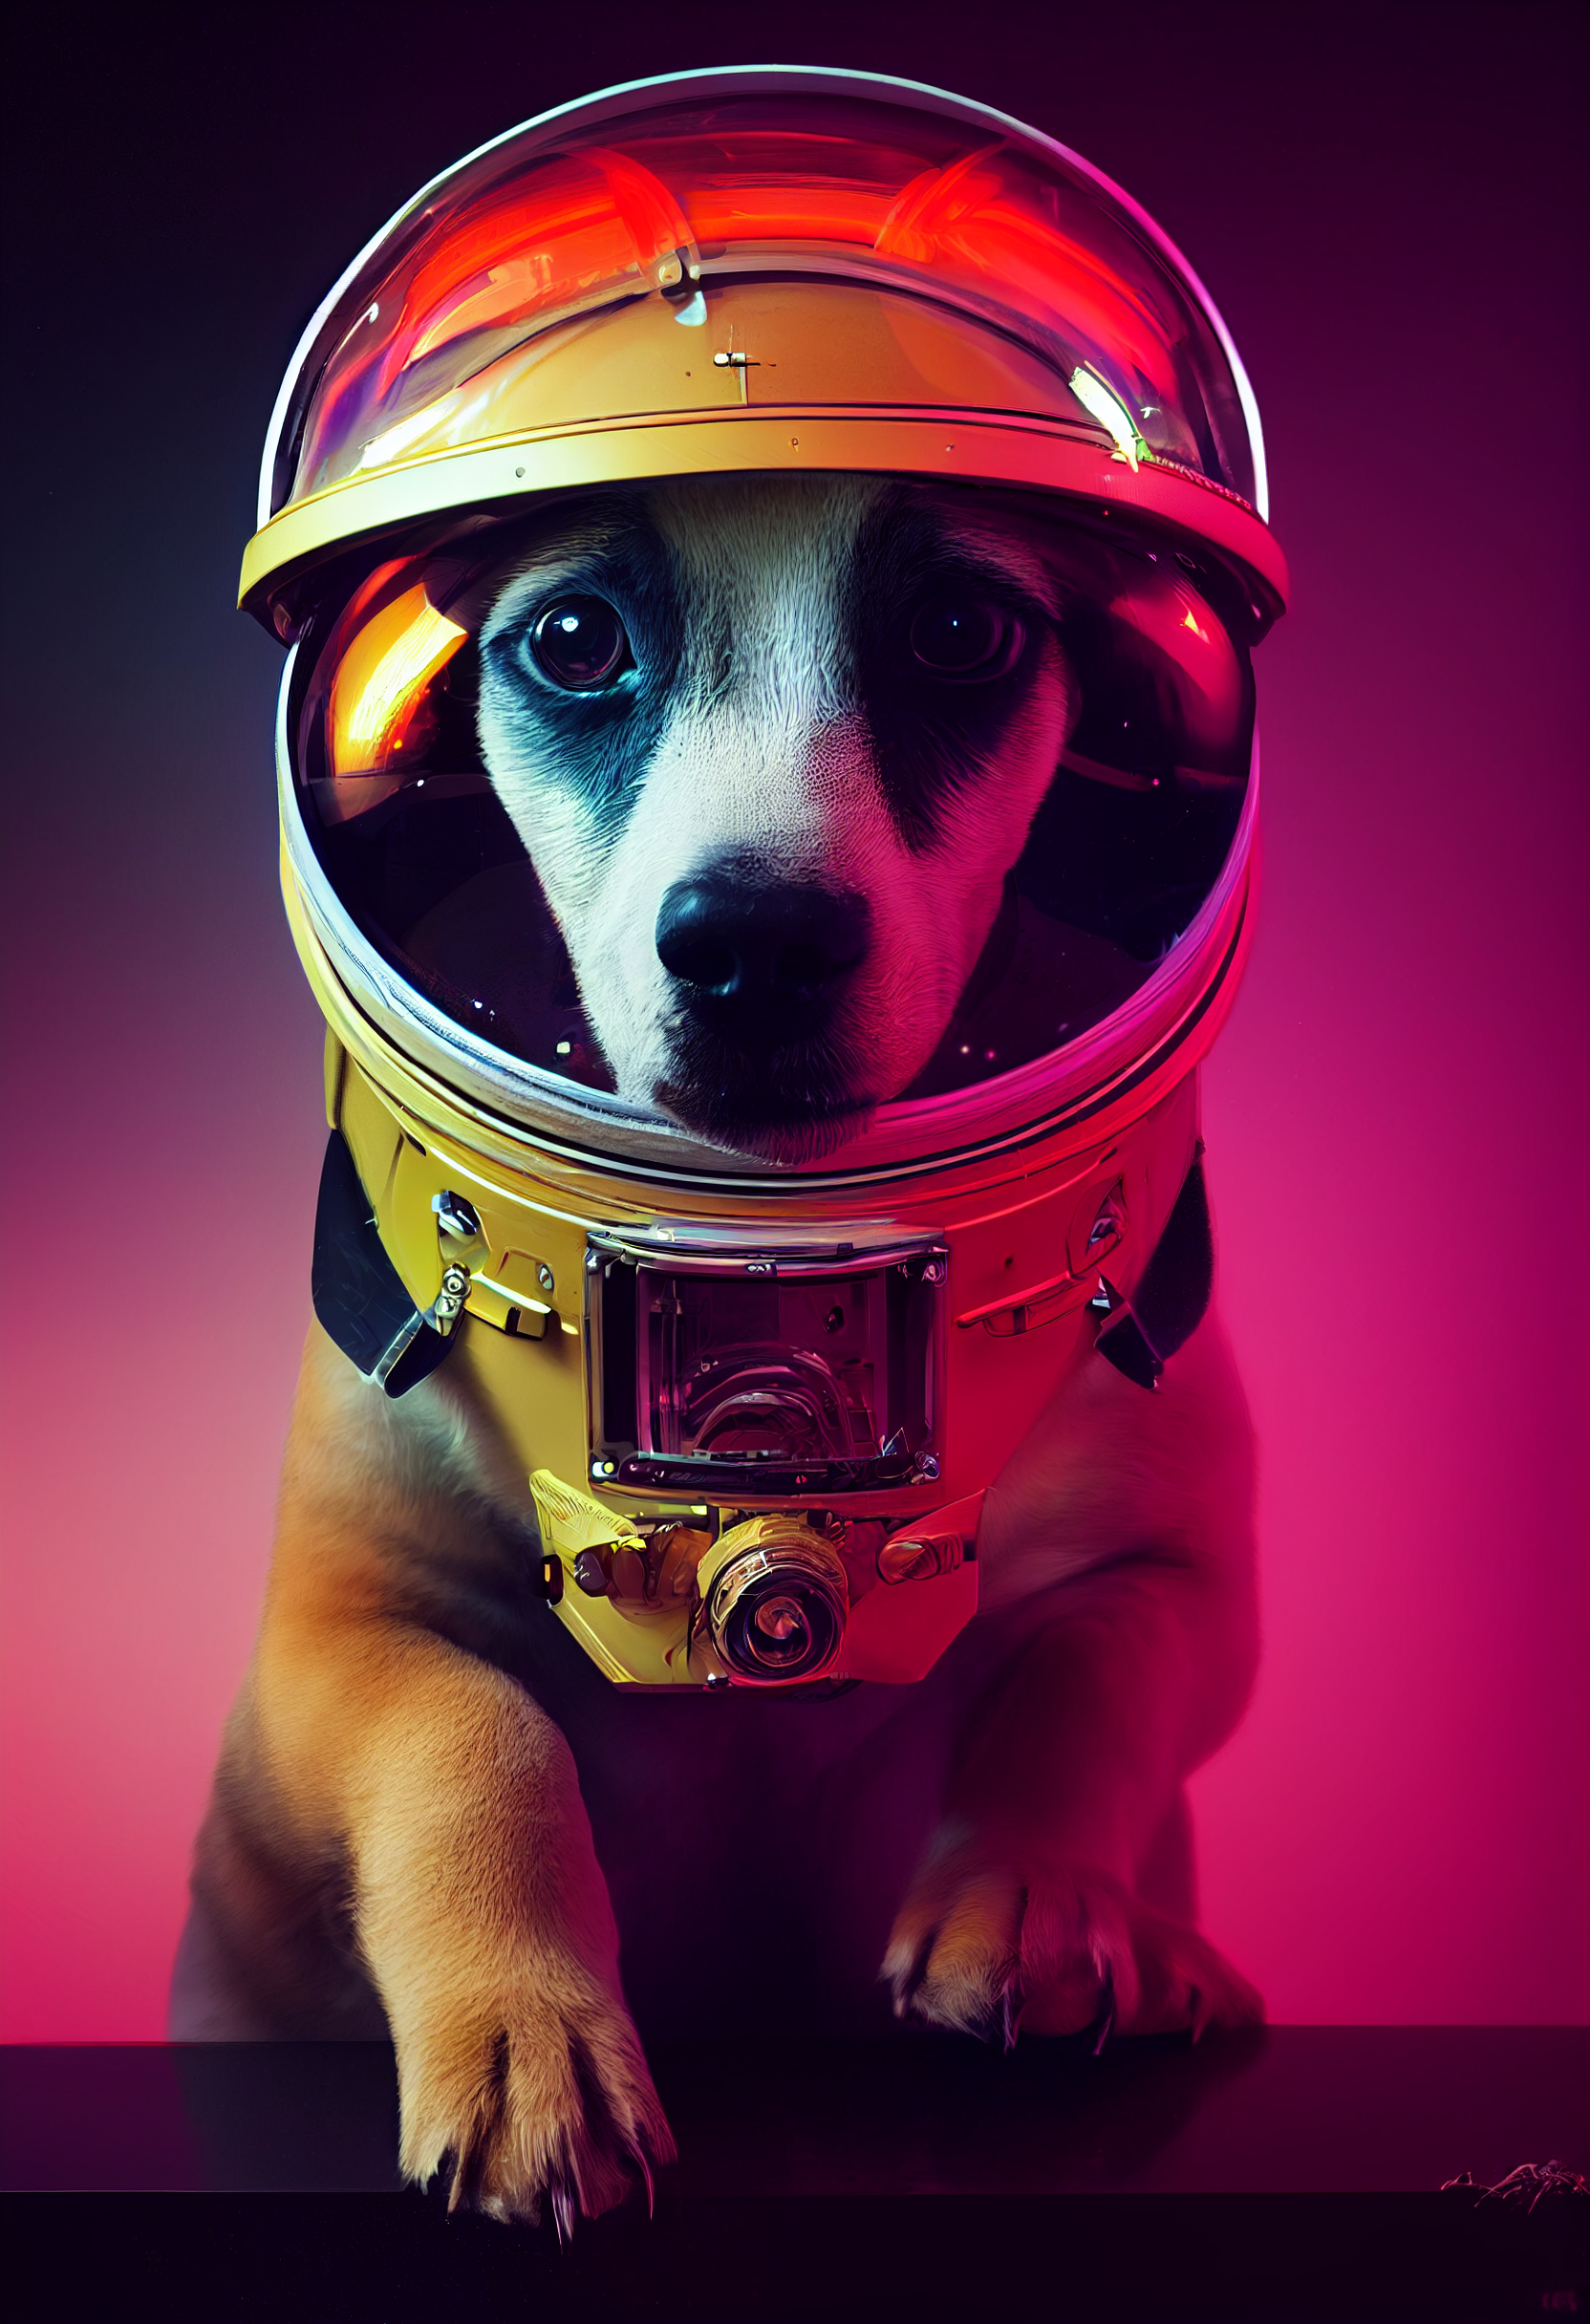 ResistanceNFT_puppy_astronaut_photo_realistic_futuristic_by_Dav_073f982b-826e-41ed-87dd-a35f50244b3a.png